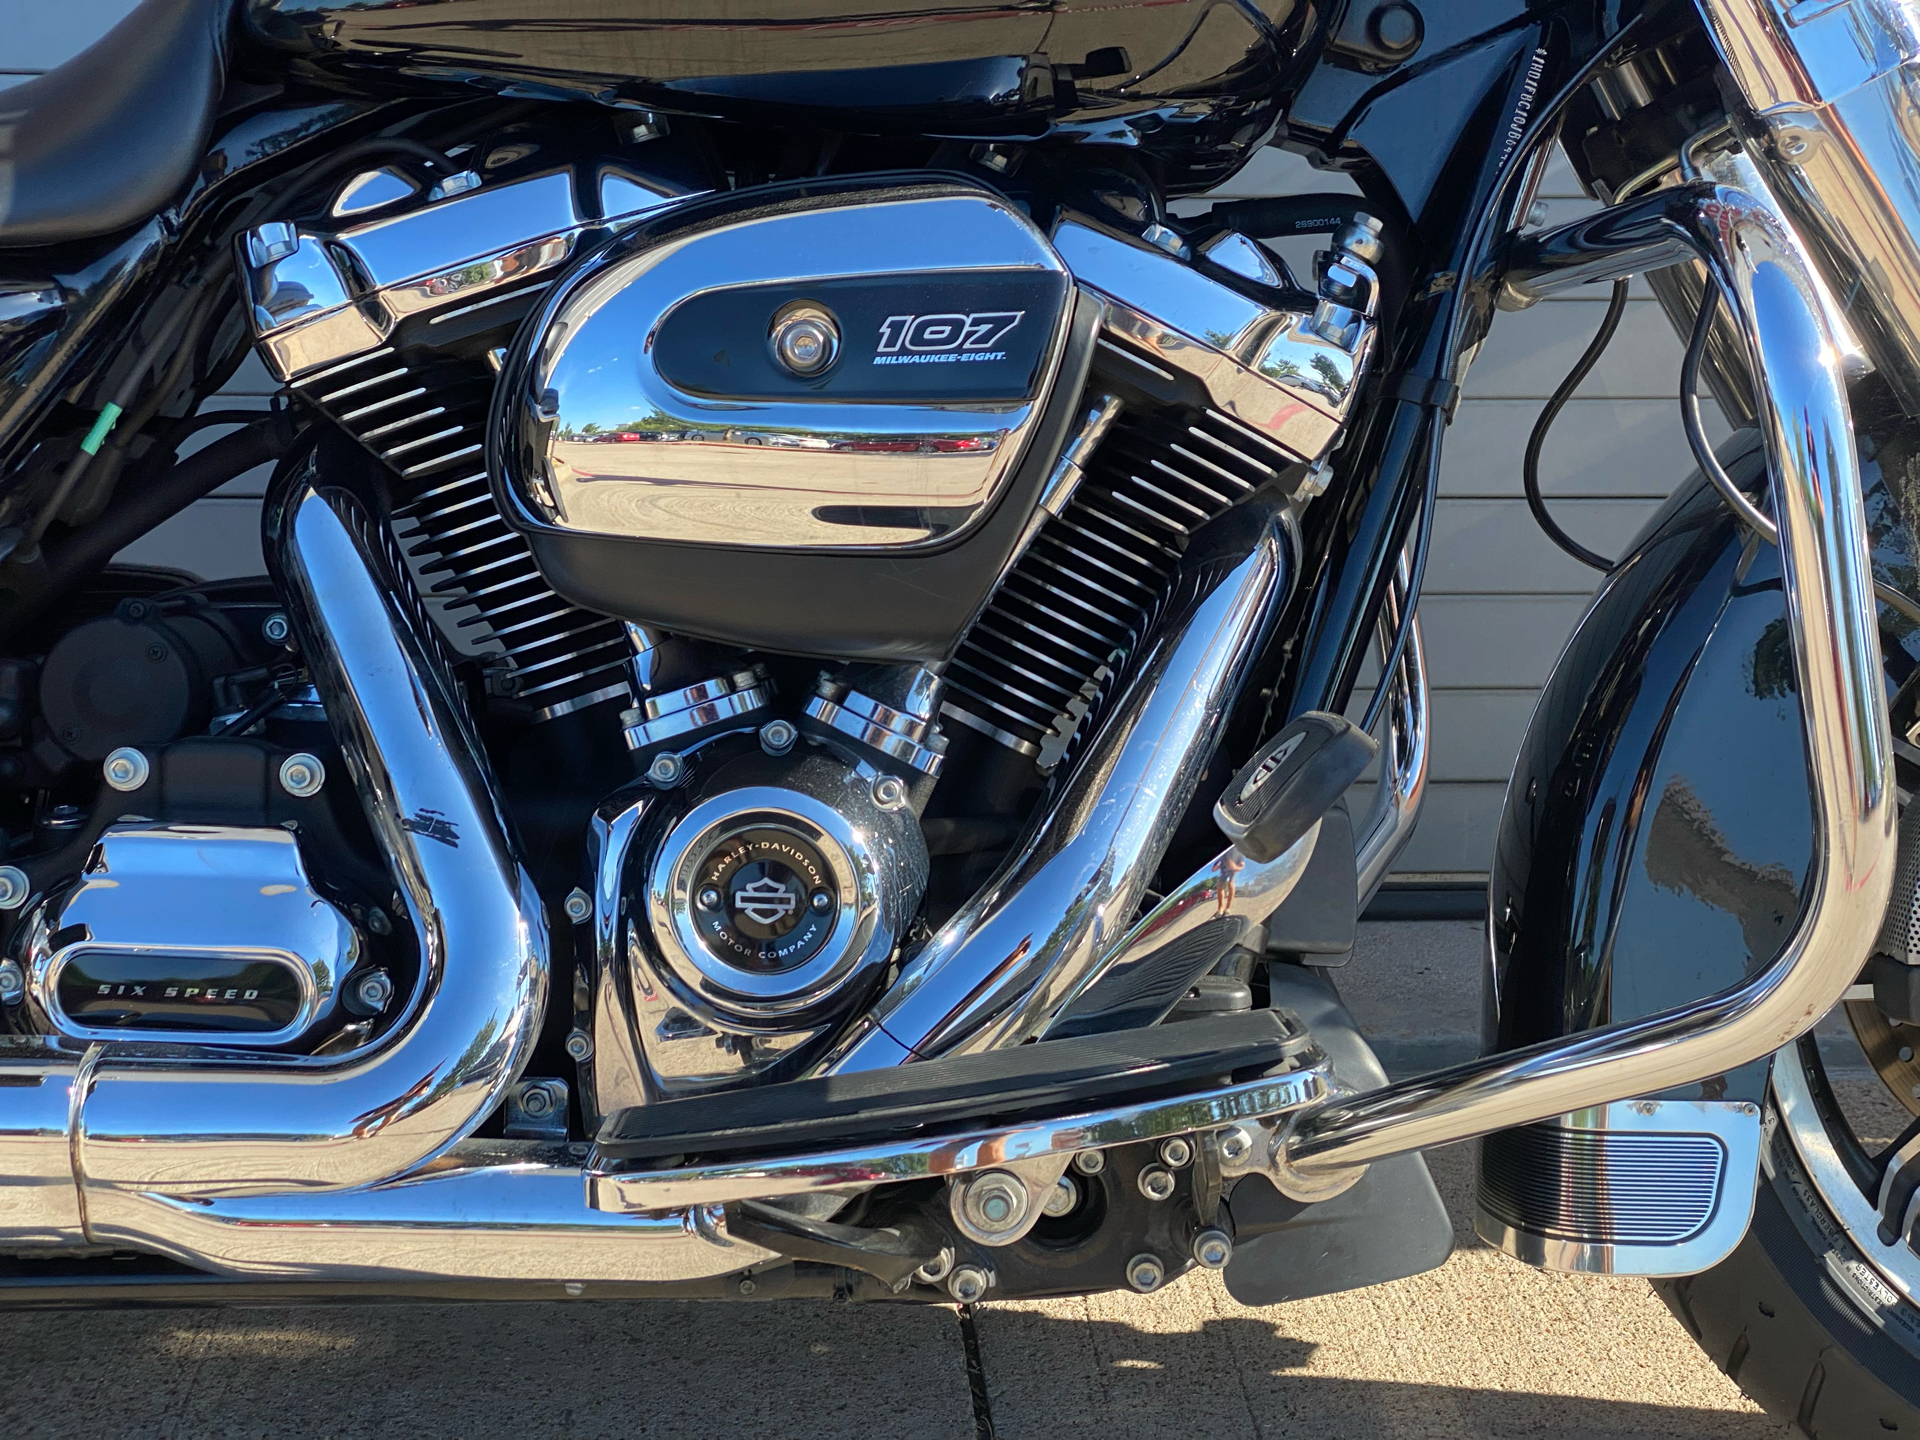 2018 Harley-Davidson Road King® in Grand Prairie, Texas - Photo 6